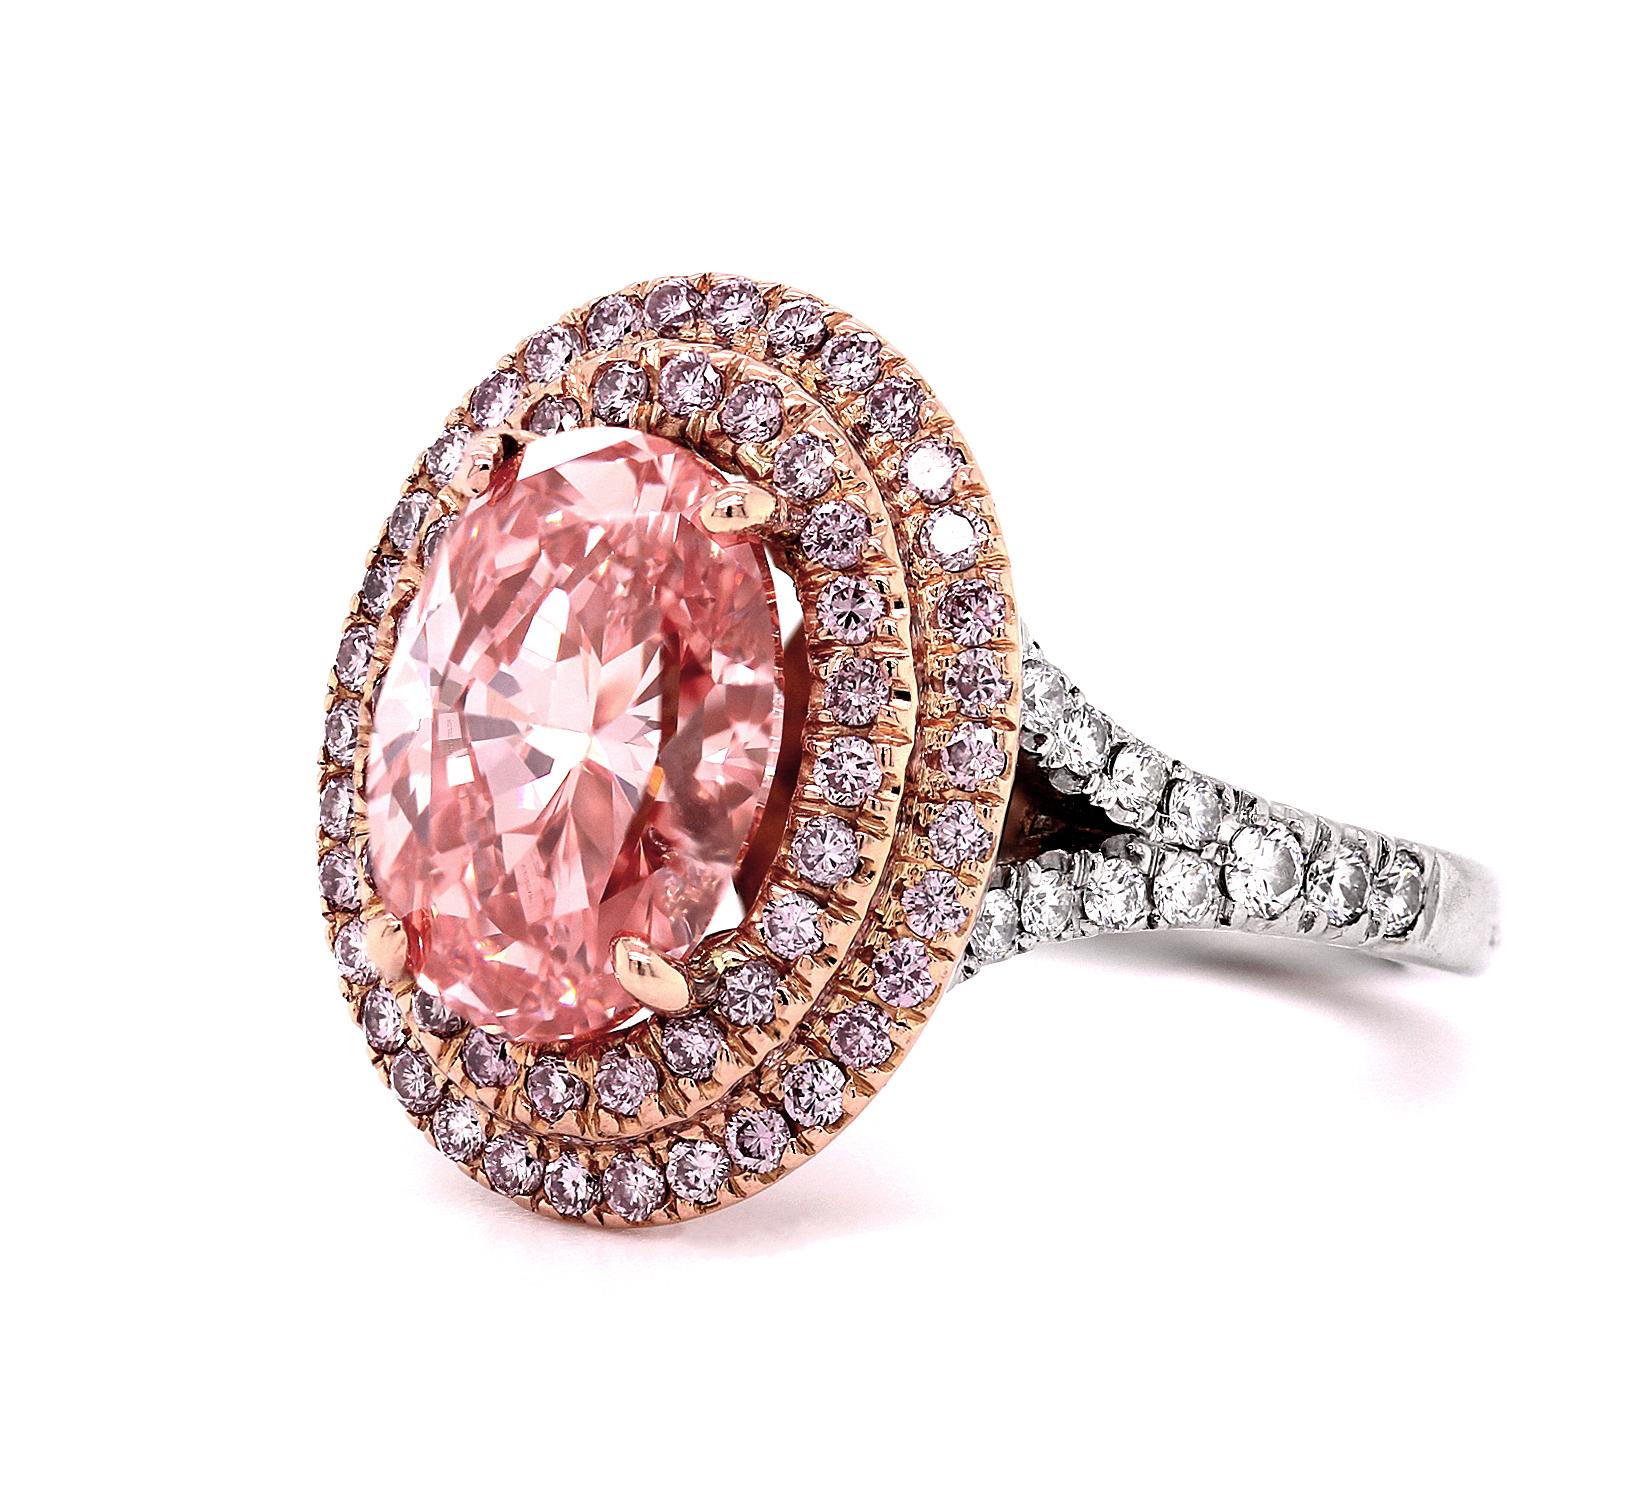 Modern GIA Certified 3.21 Ct Fancy Vivid Orangey Pink Oval Diamond Ring in Platinum